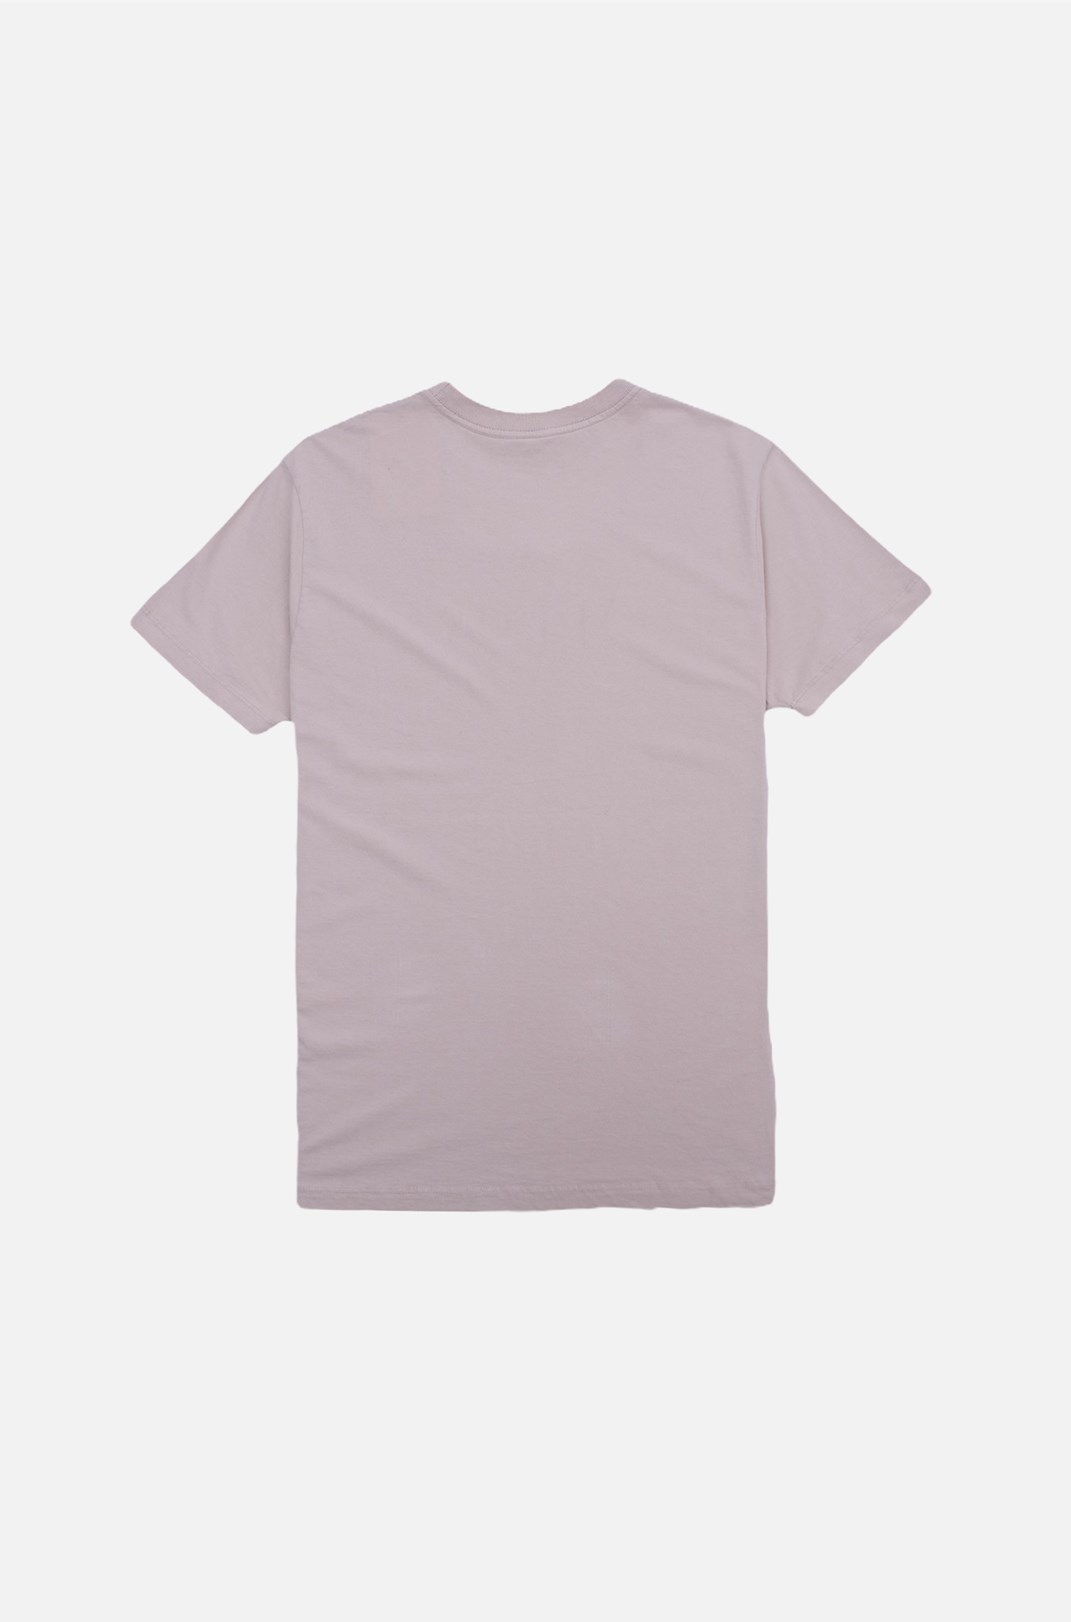 Camiseta Regular Approve Monochromatic Bege V2